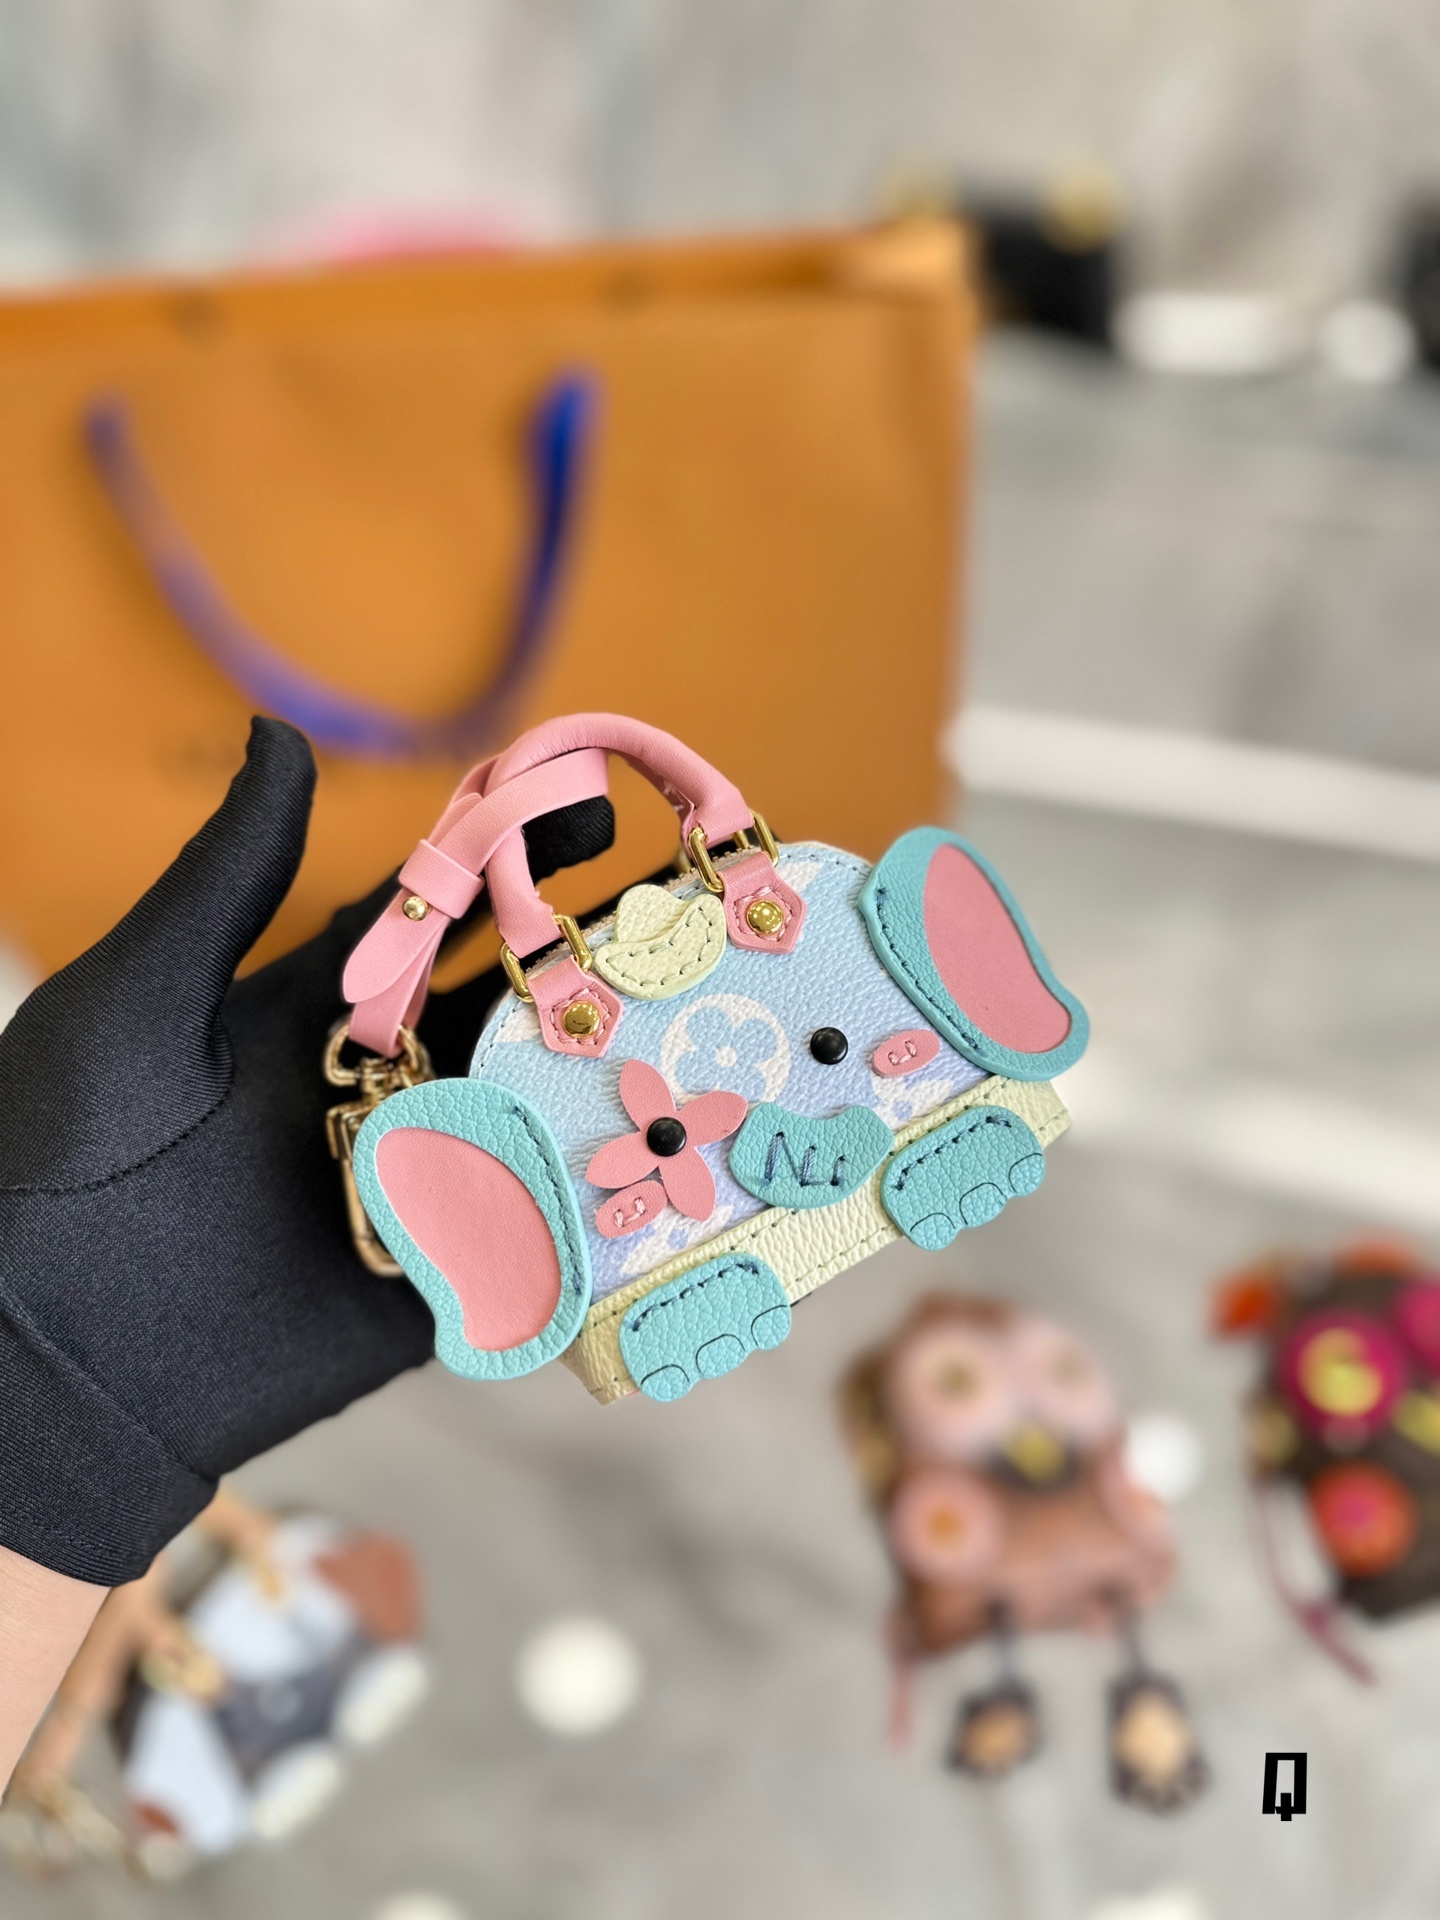 Louis Vuitton Puppy Keychain Dog Hat Box Supple Bag Charm Purse Key Holder  LV